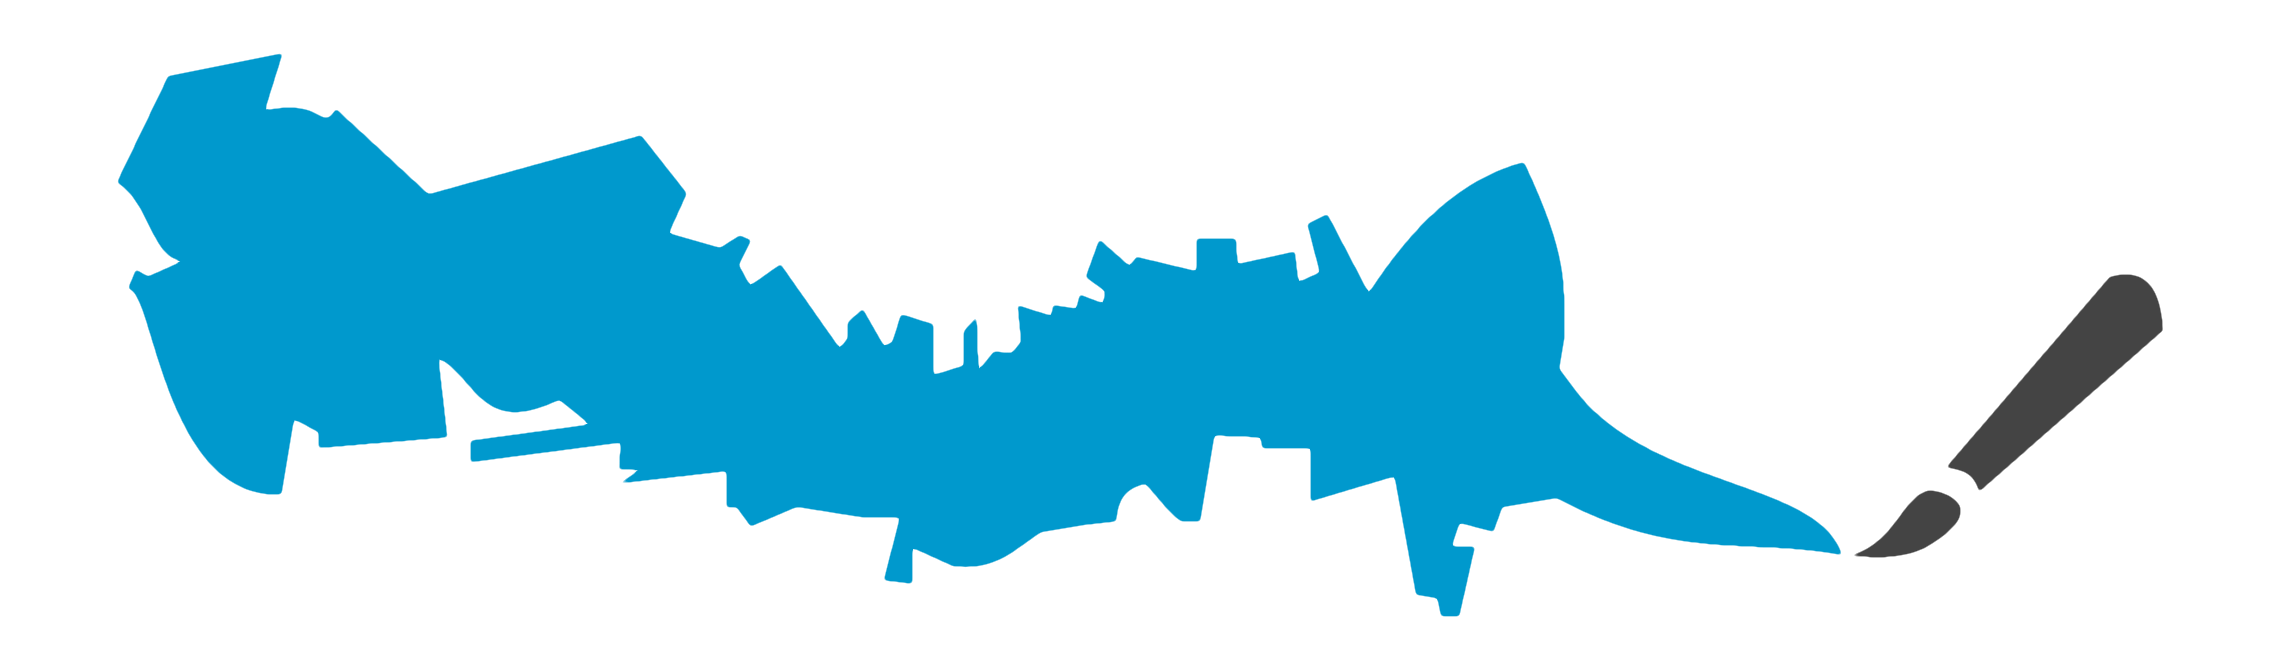 Districtr logo